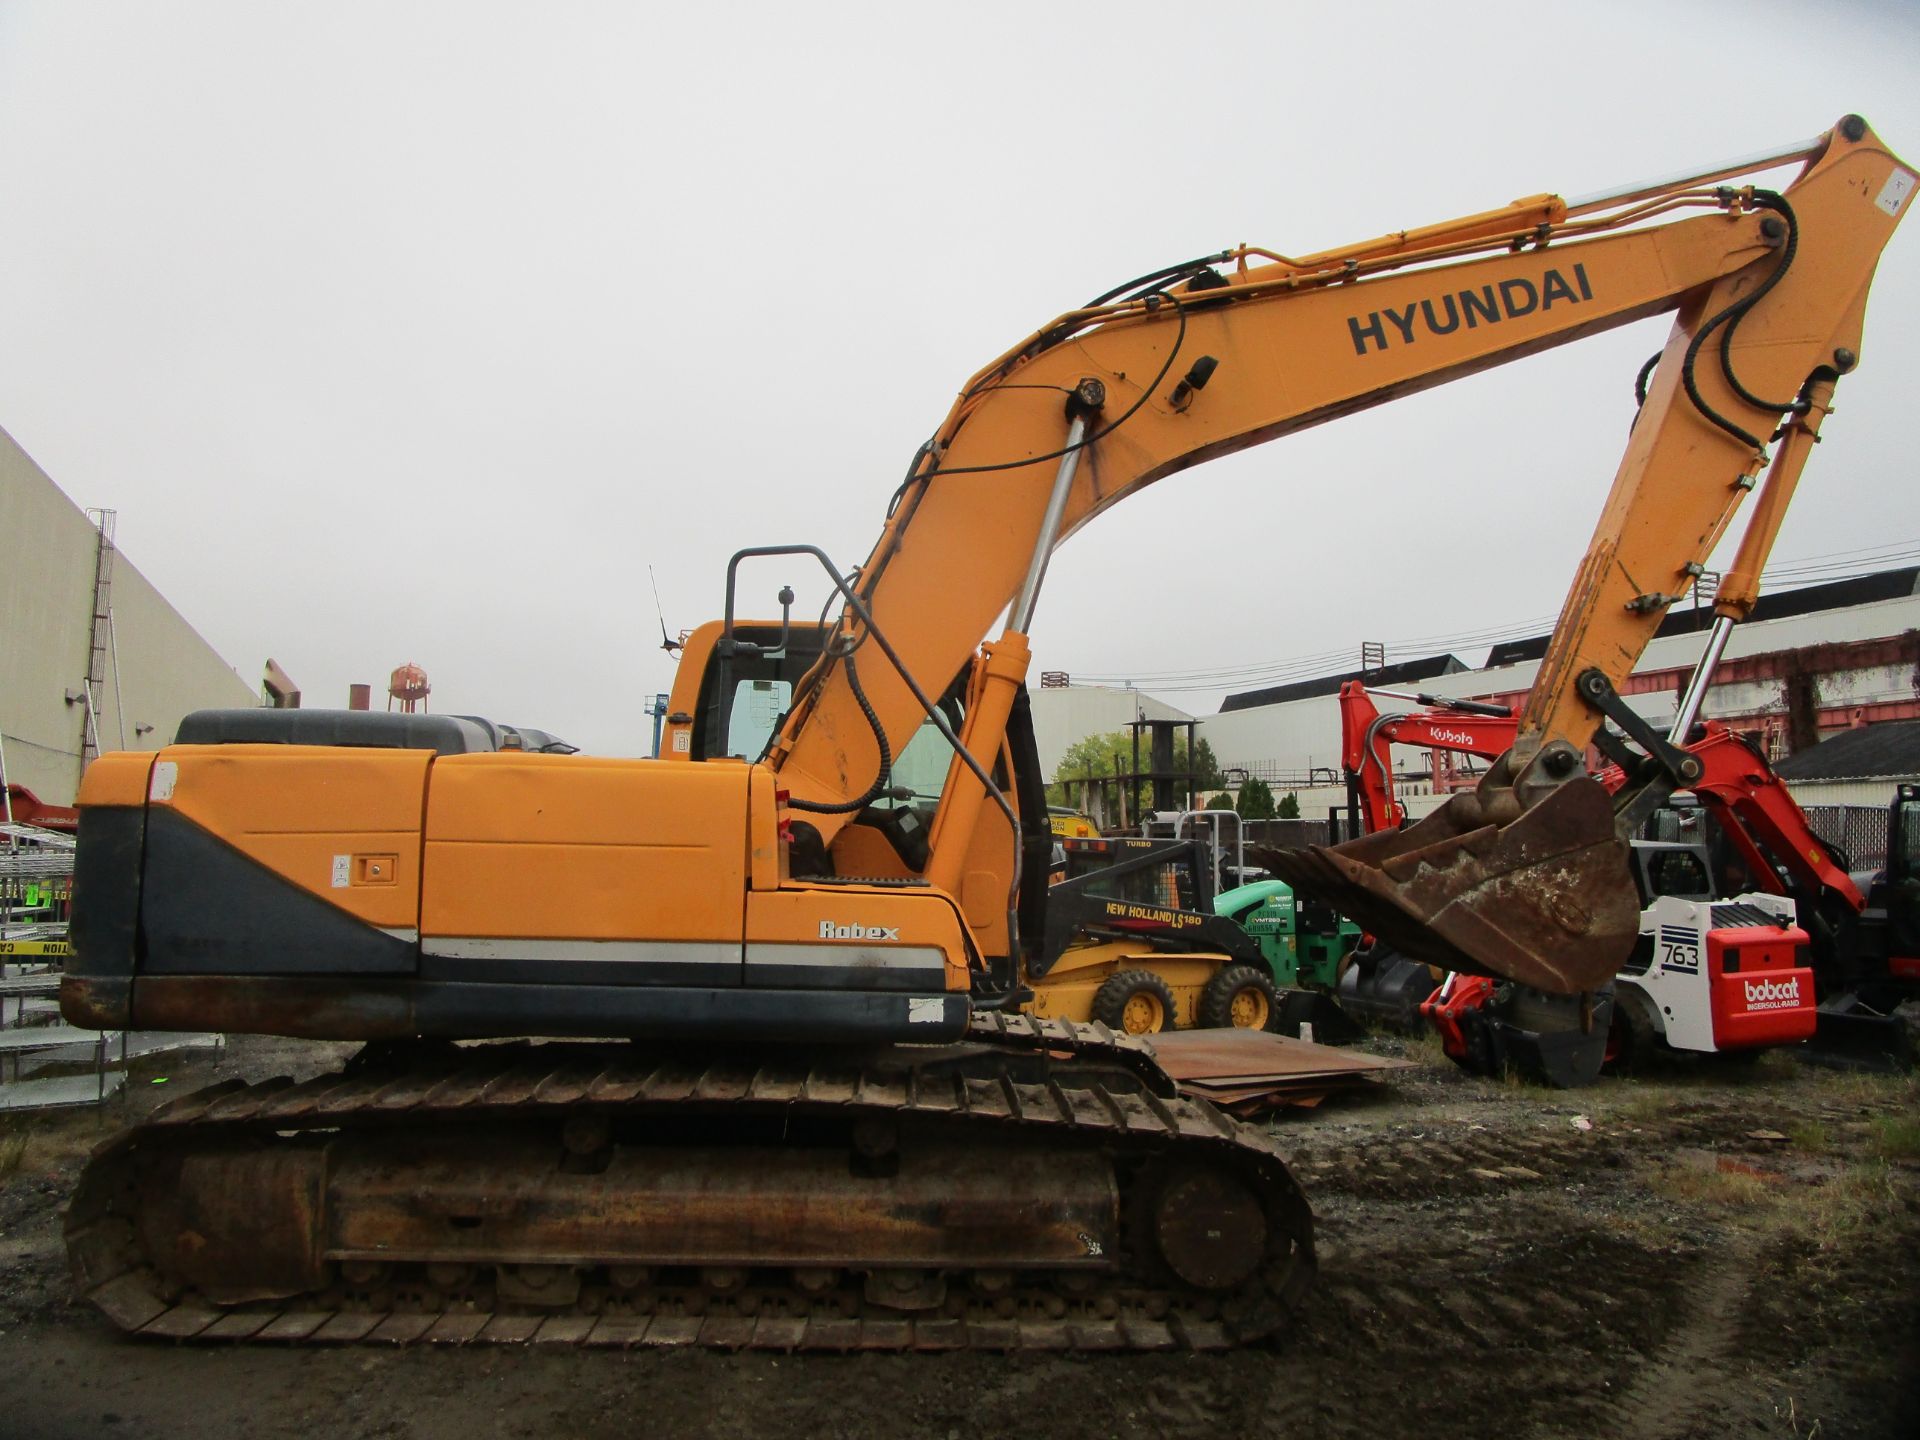 Hyundai R0BEX210LC-9 Excavator - Located in Lester, PA - Image 4 of 4